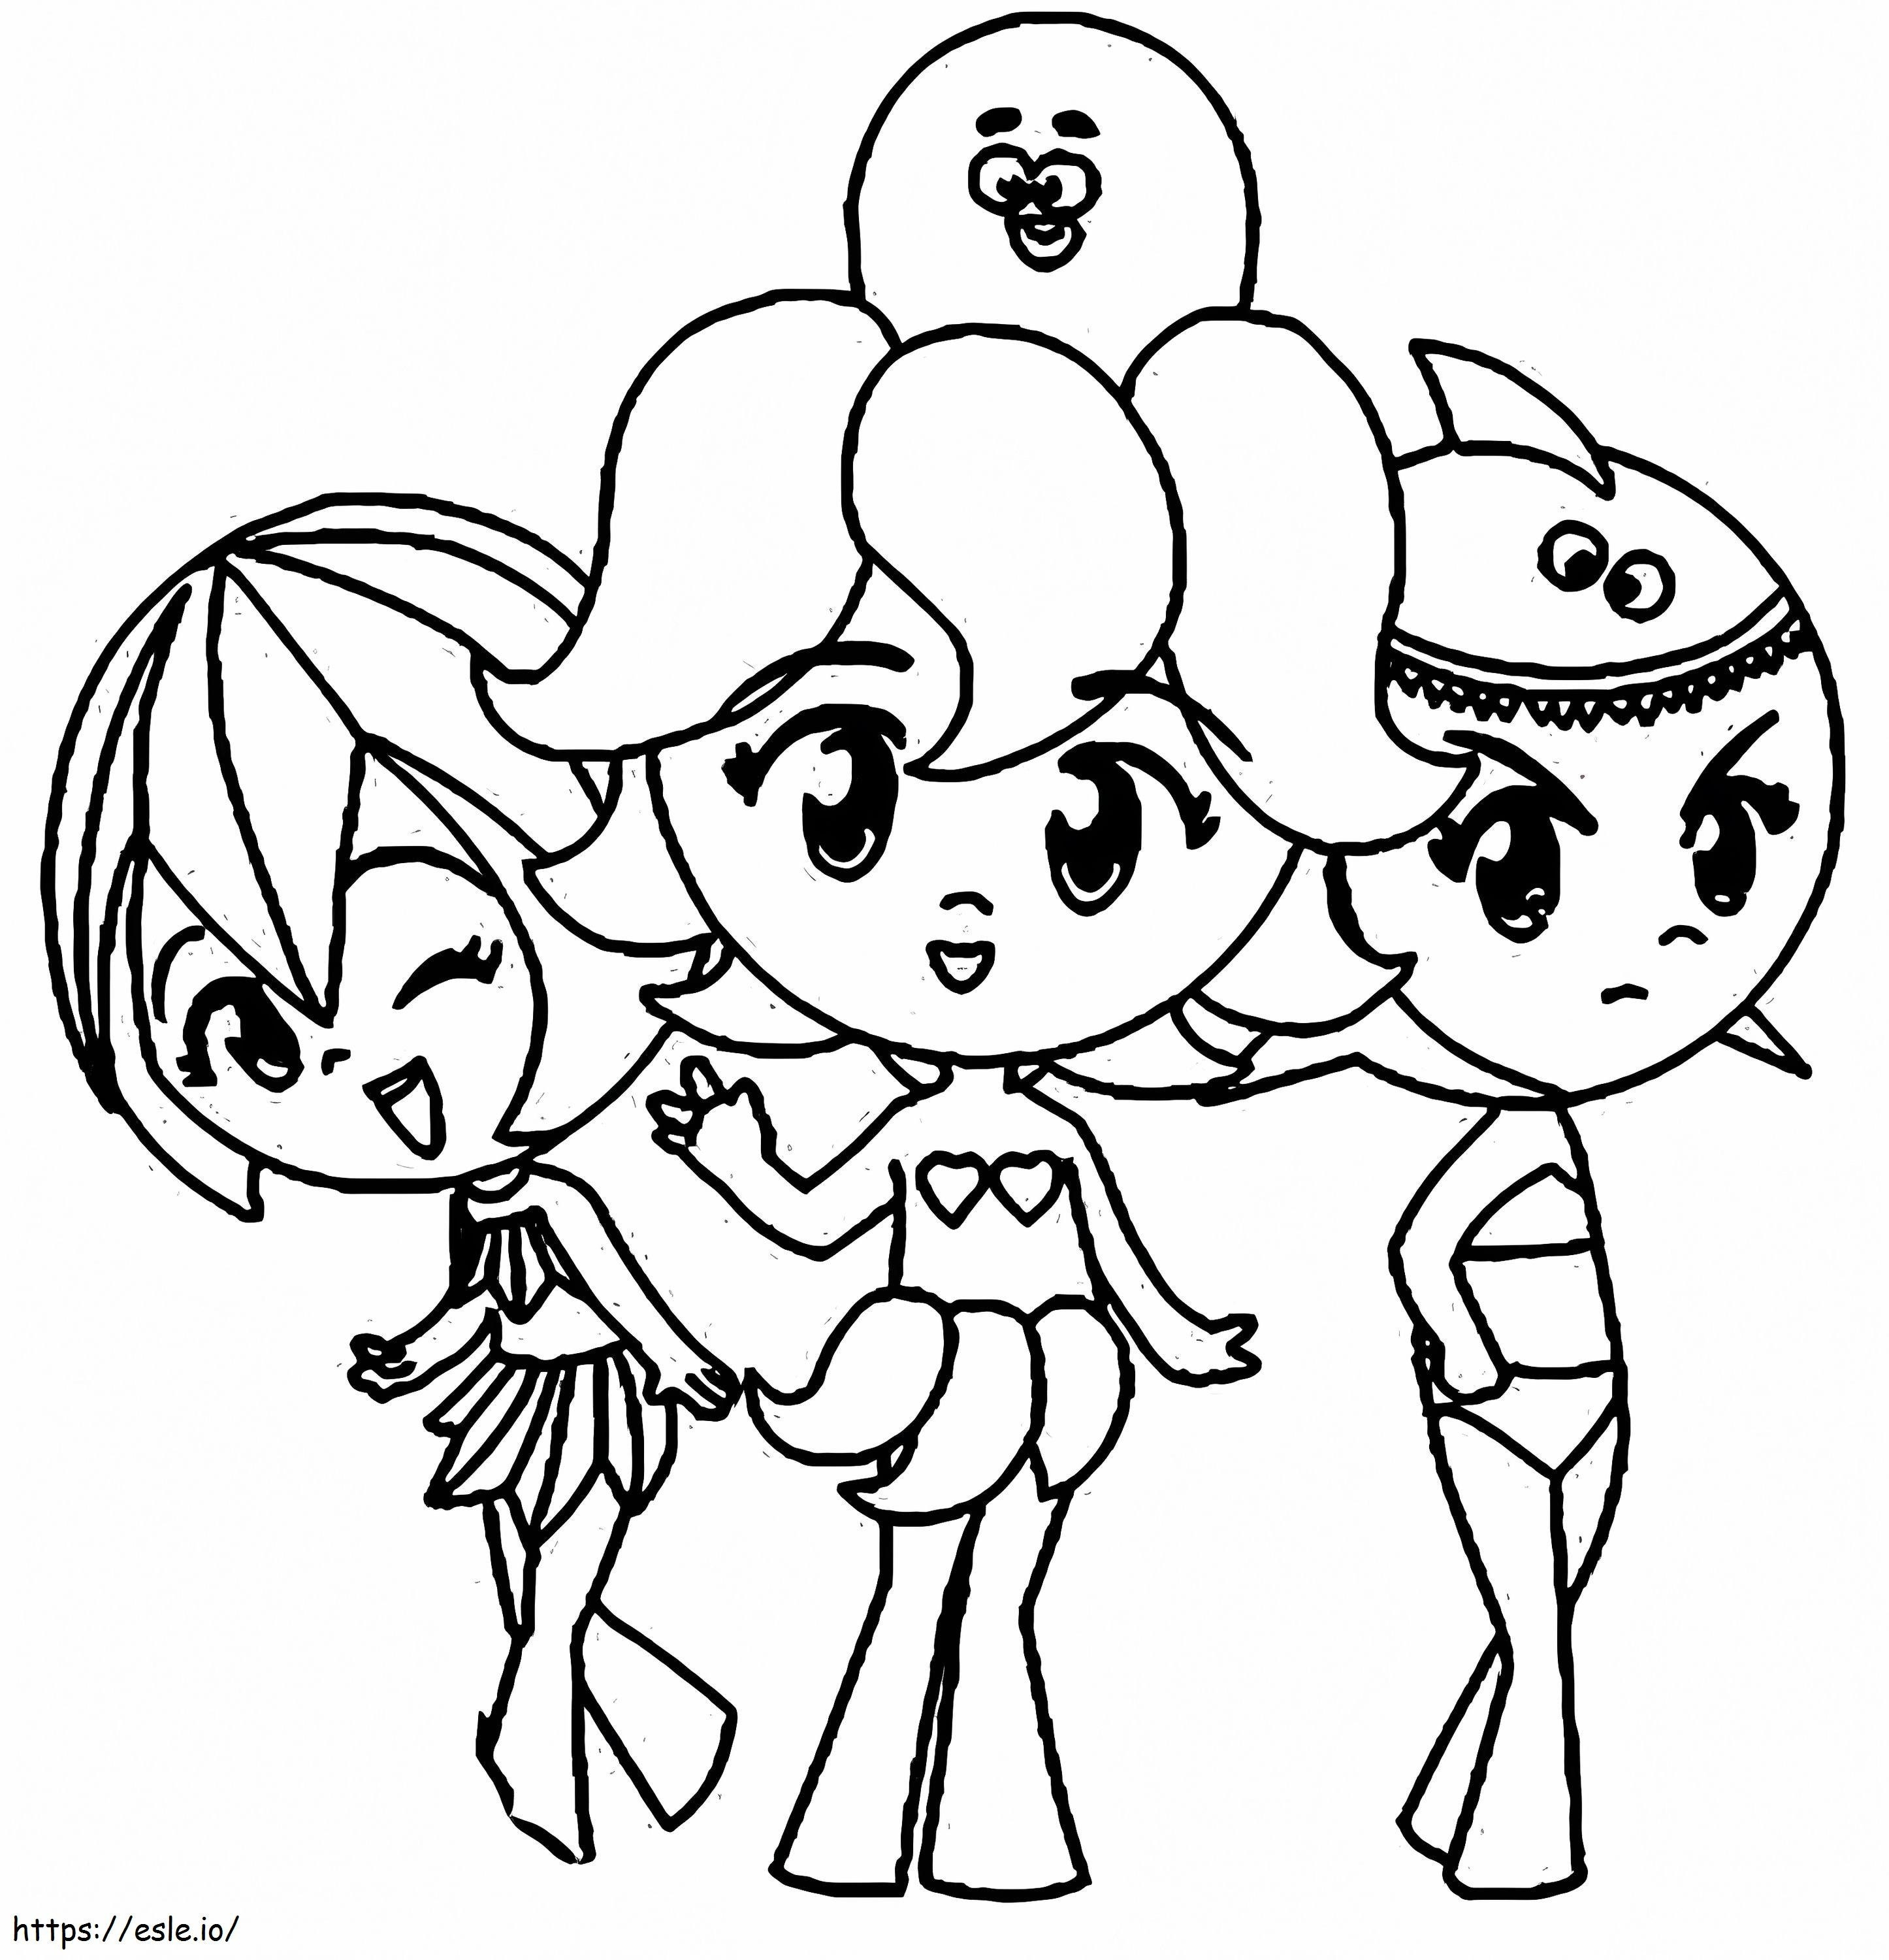 Cute Sea Princesses coloring page